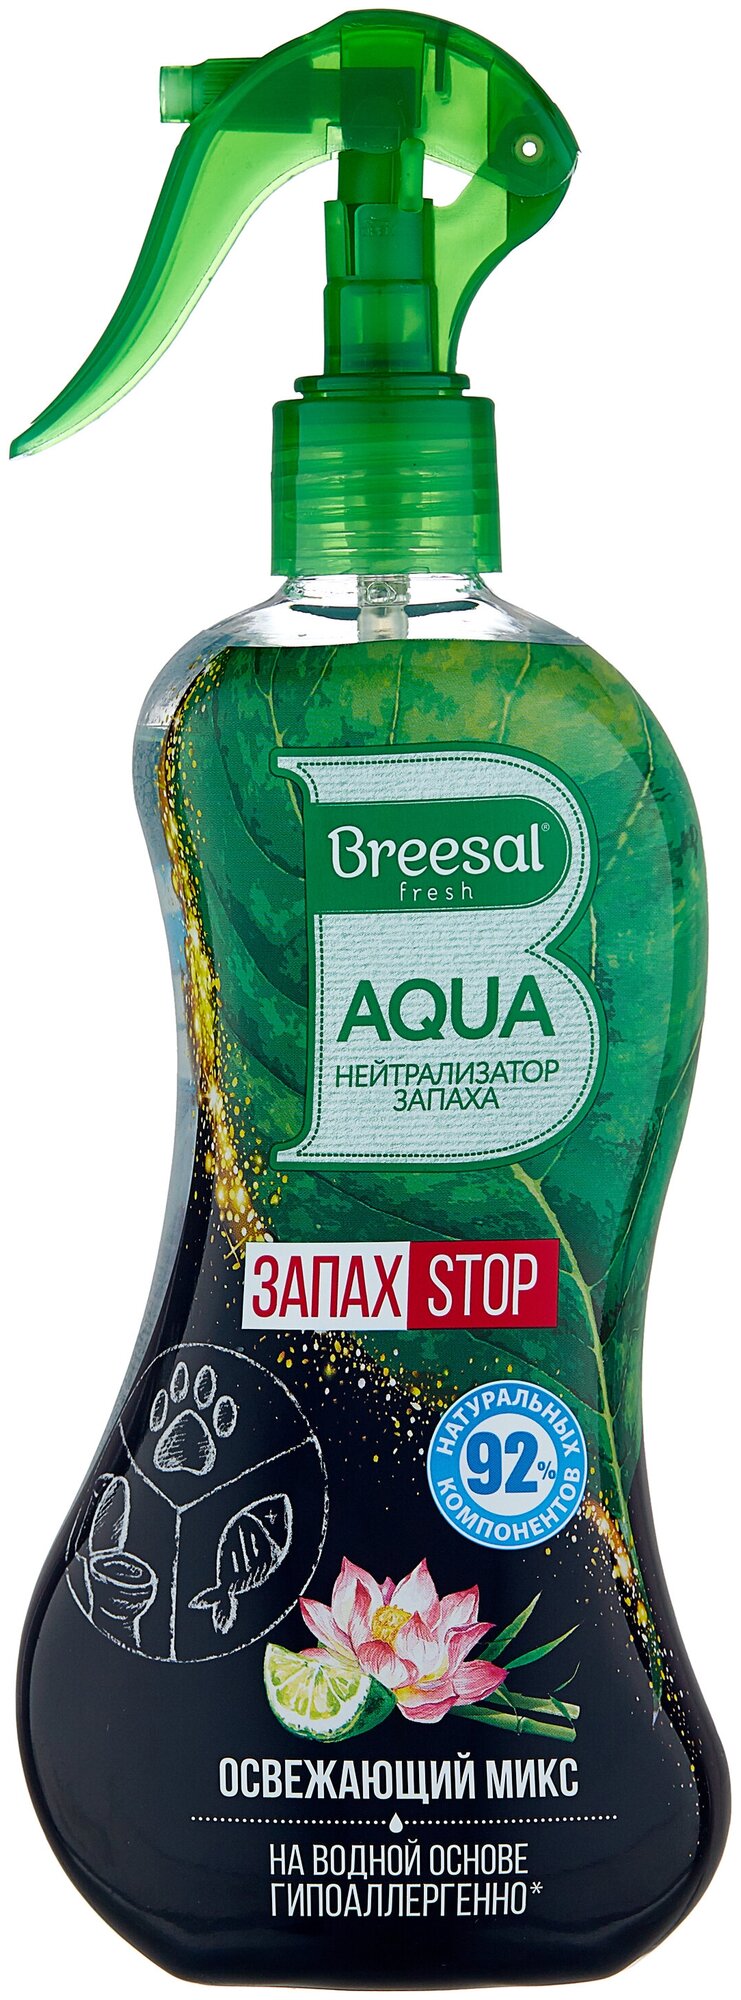 Breesal освежитель воздуха AQUA-нейтрализатор запаха Освежающий микс, 375 мл 1 шт.